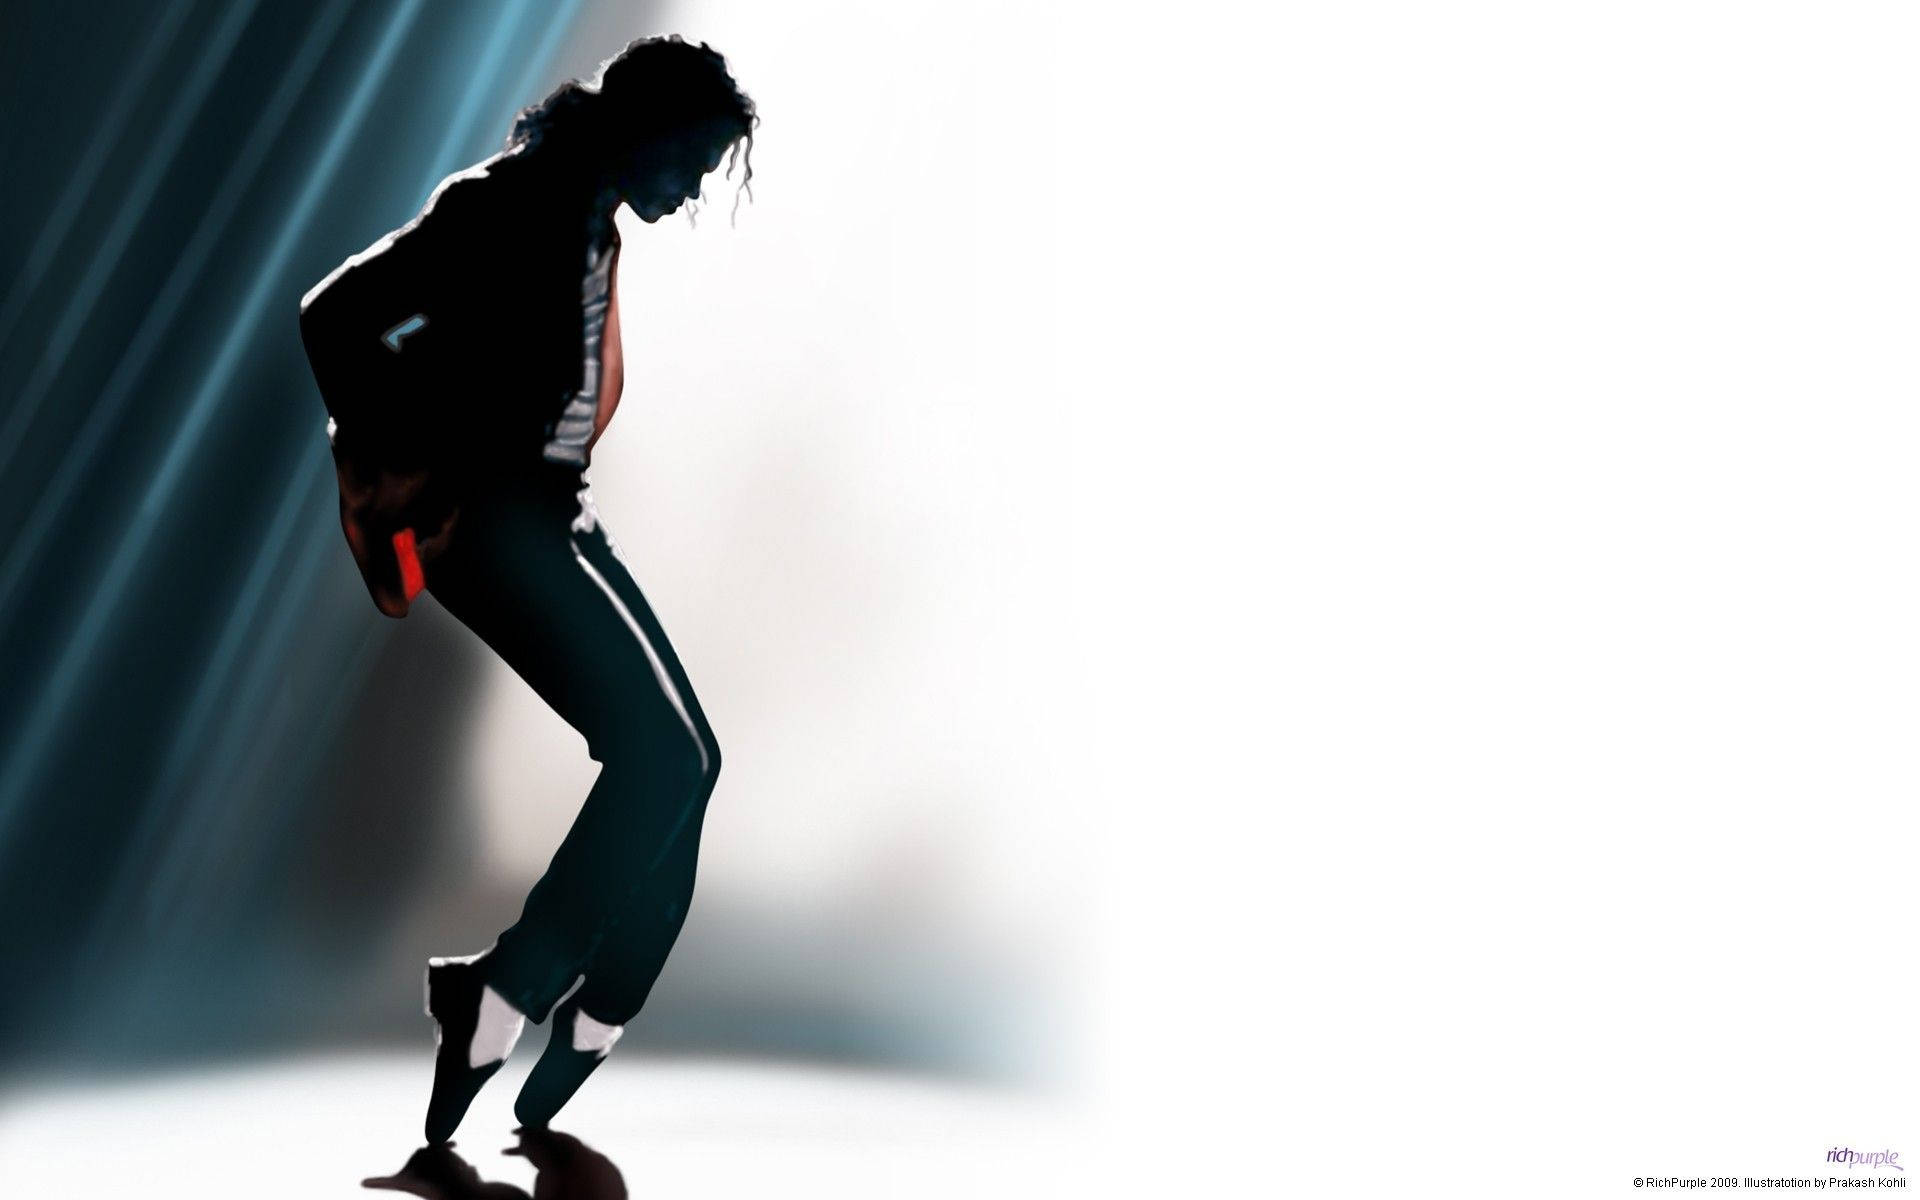 Michael Jackson Iconic Dance Move